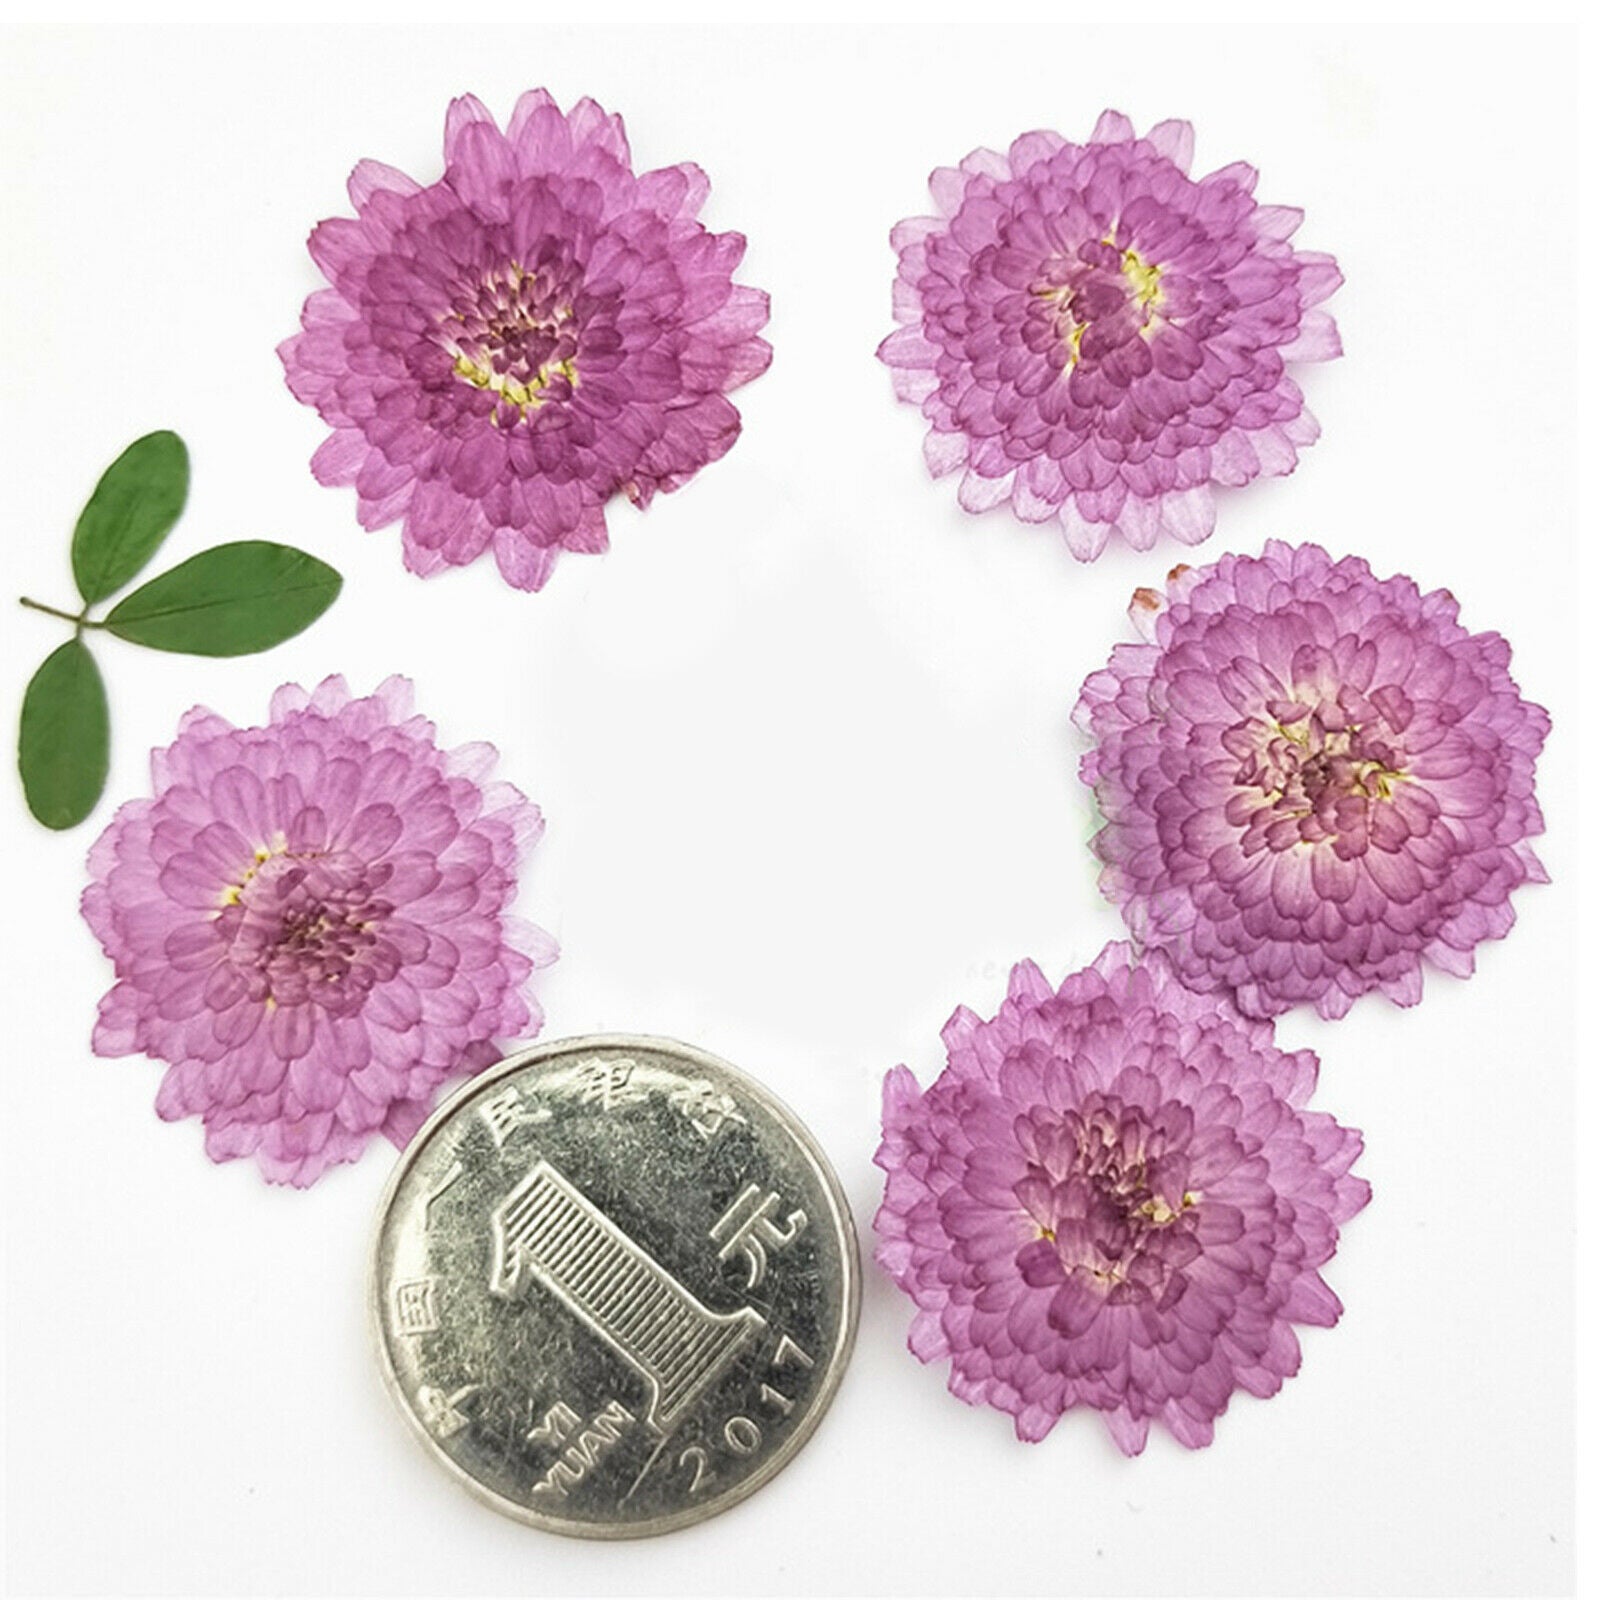 24pcs Pressed Dried Flower Leaves DIY Bookmark Nail Arts Embellishments